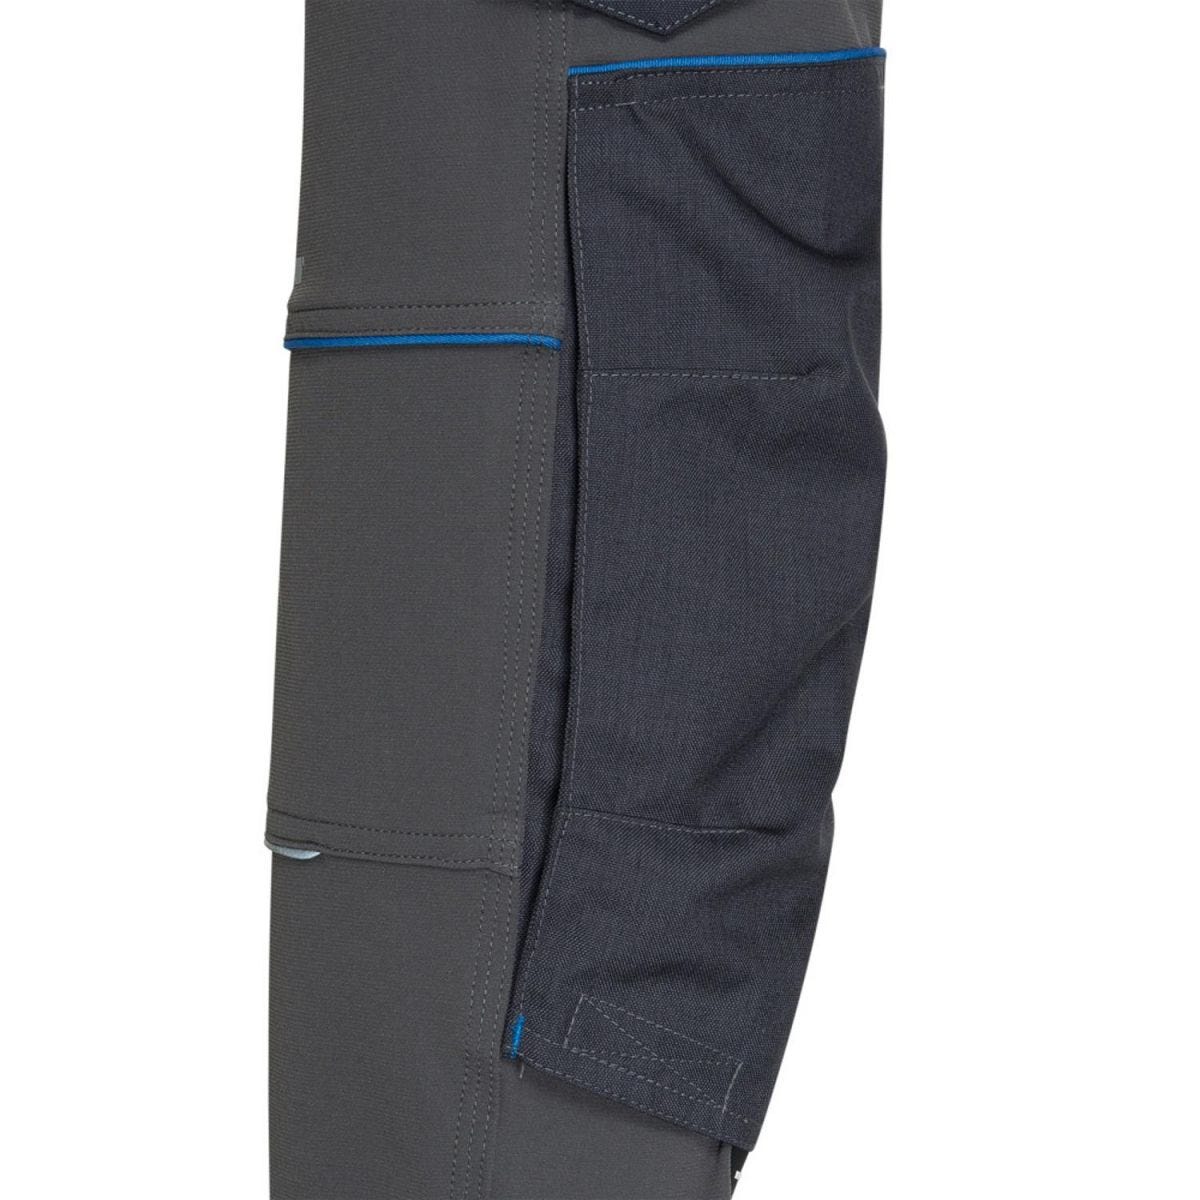 Pantalon de travail SACHA gris/bleu - North Ways - Taille 38 4